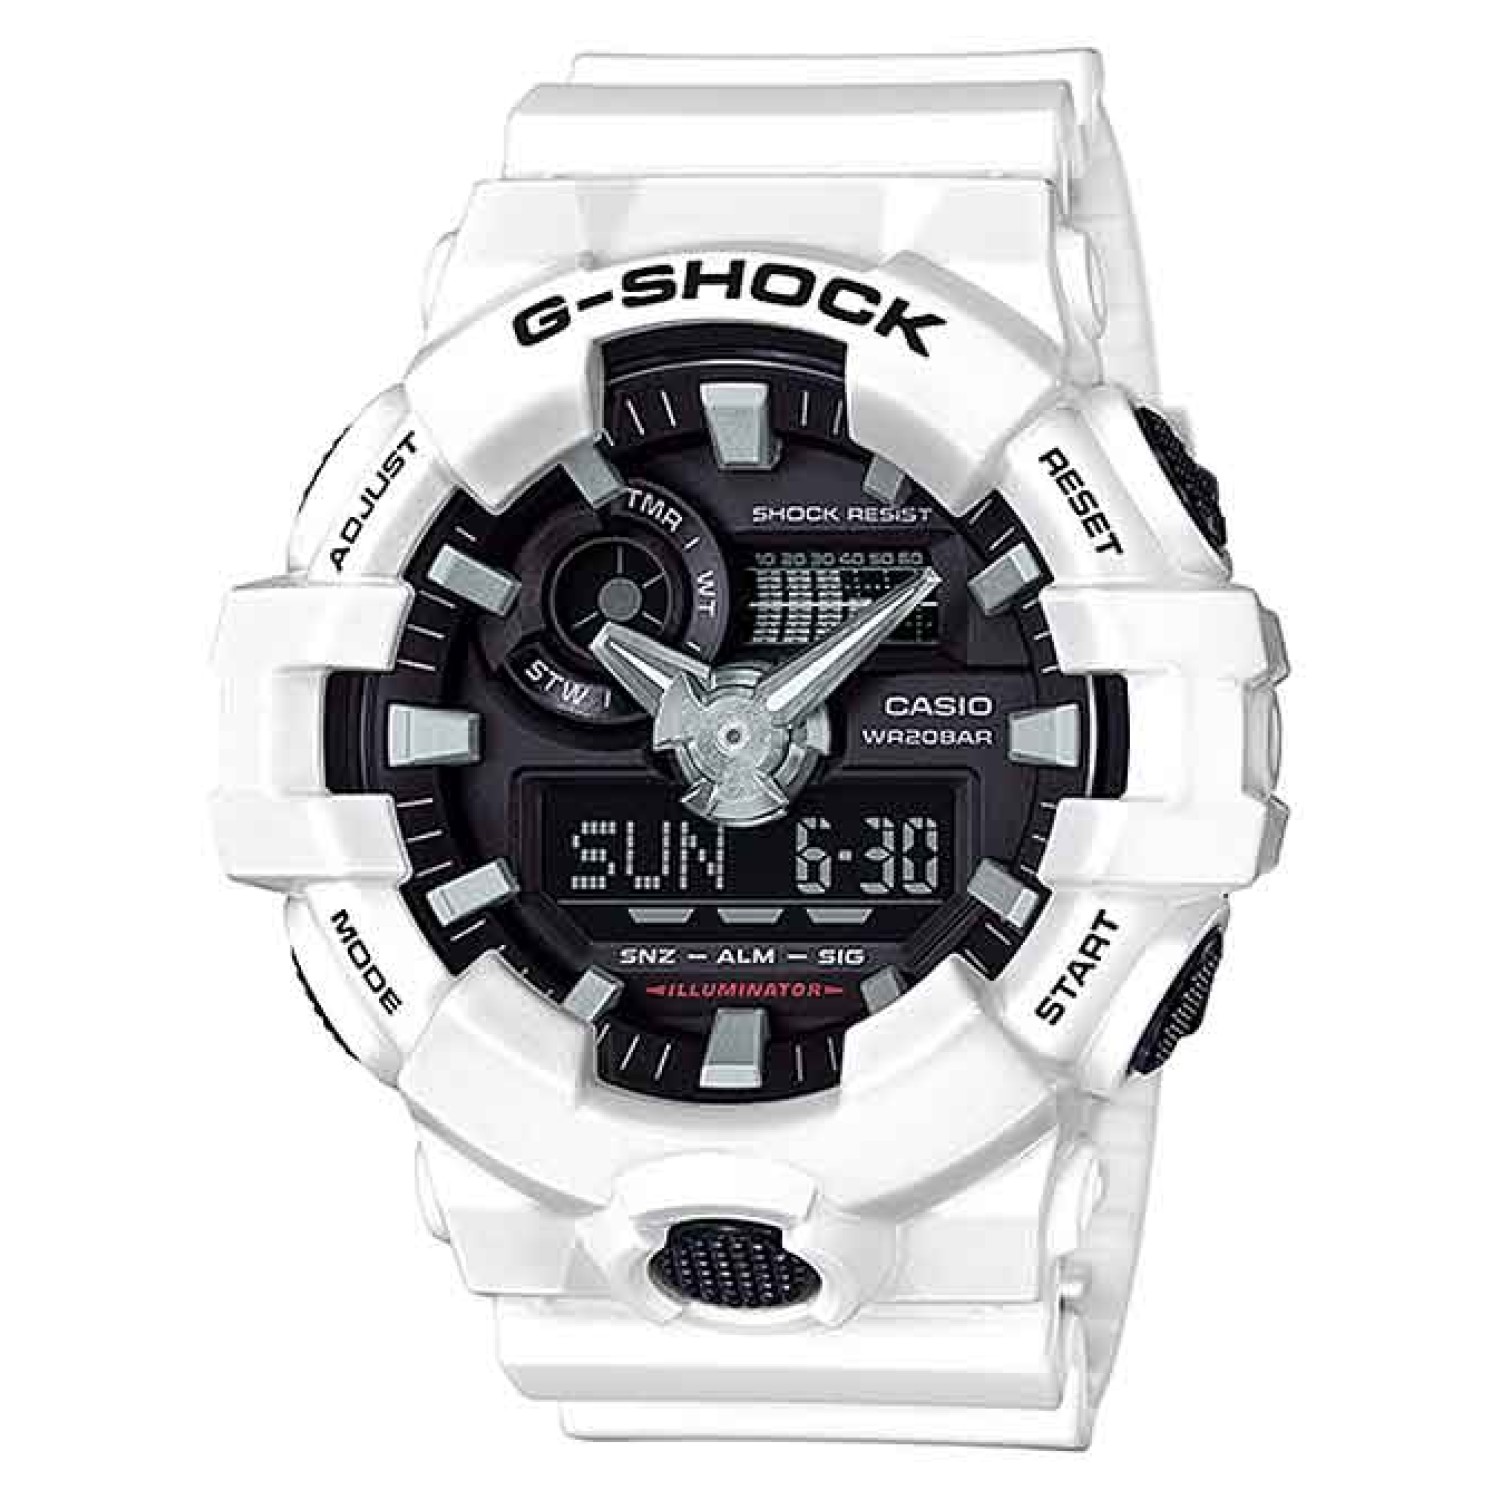 GA700-7A G-SHOCK  Analogue Digital.casio watches nz sale $269.00